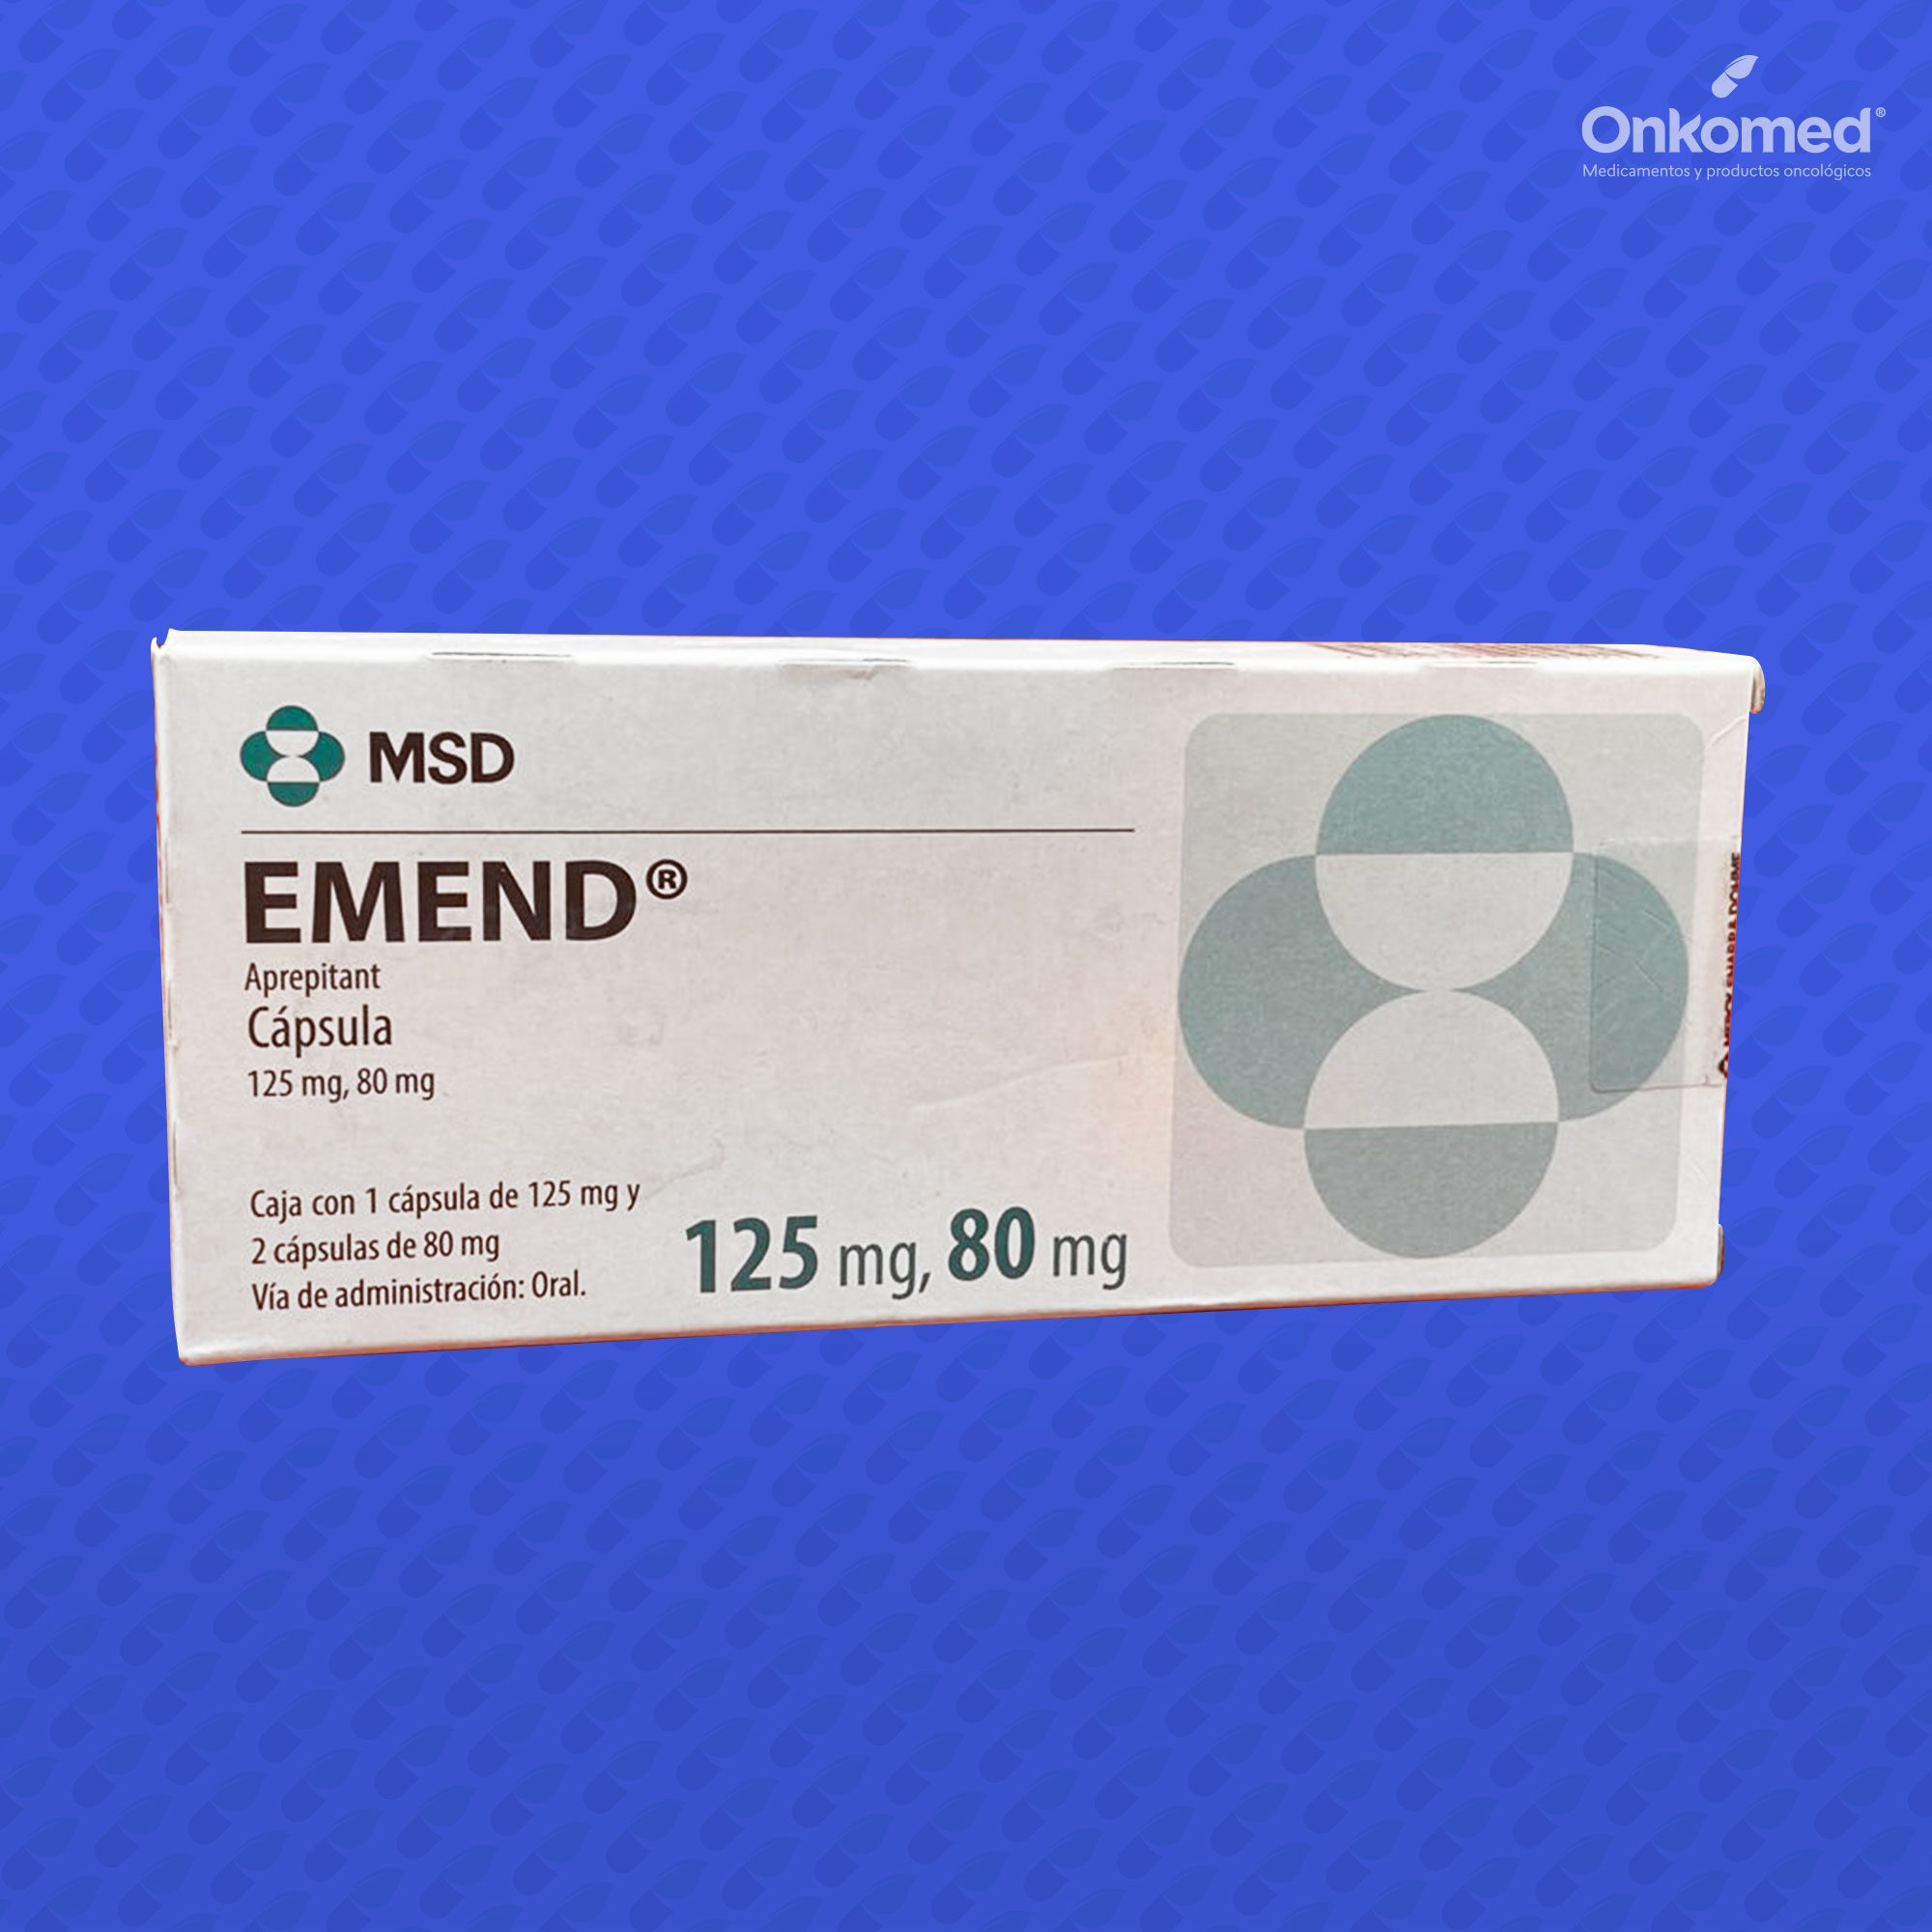 Aprepitant tableta 125/80 mg, Emend, MSD - Onkomed Farmacia